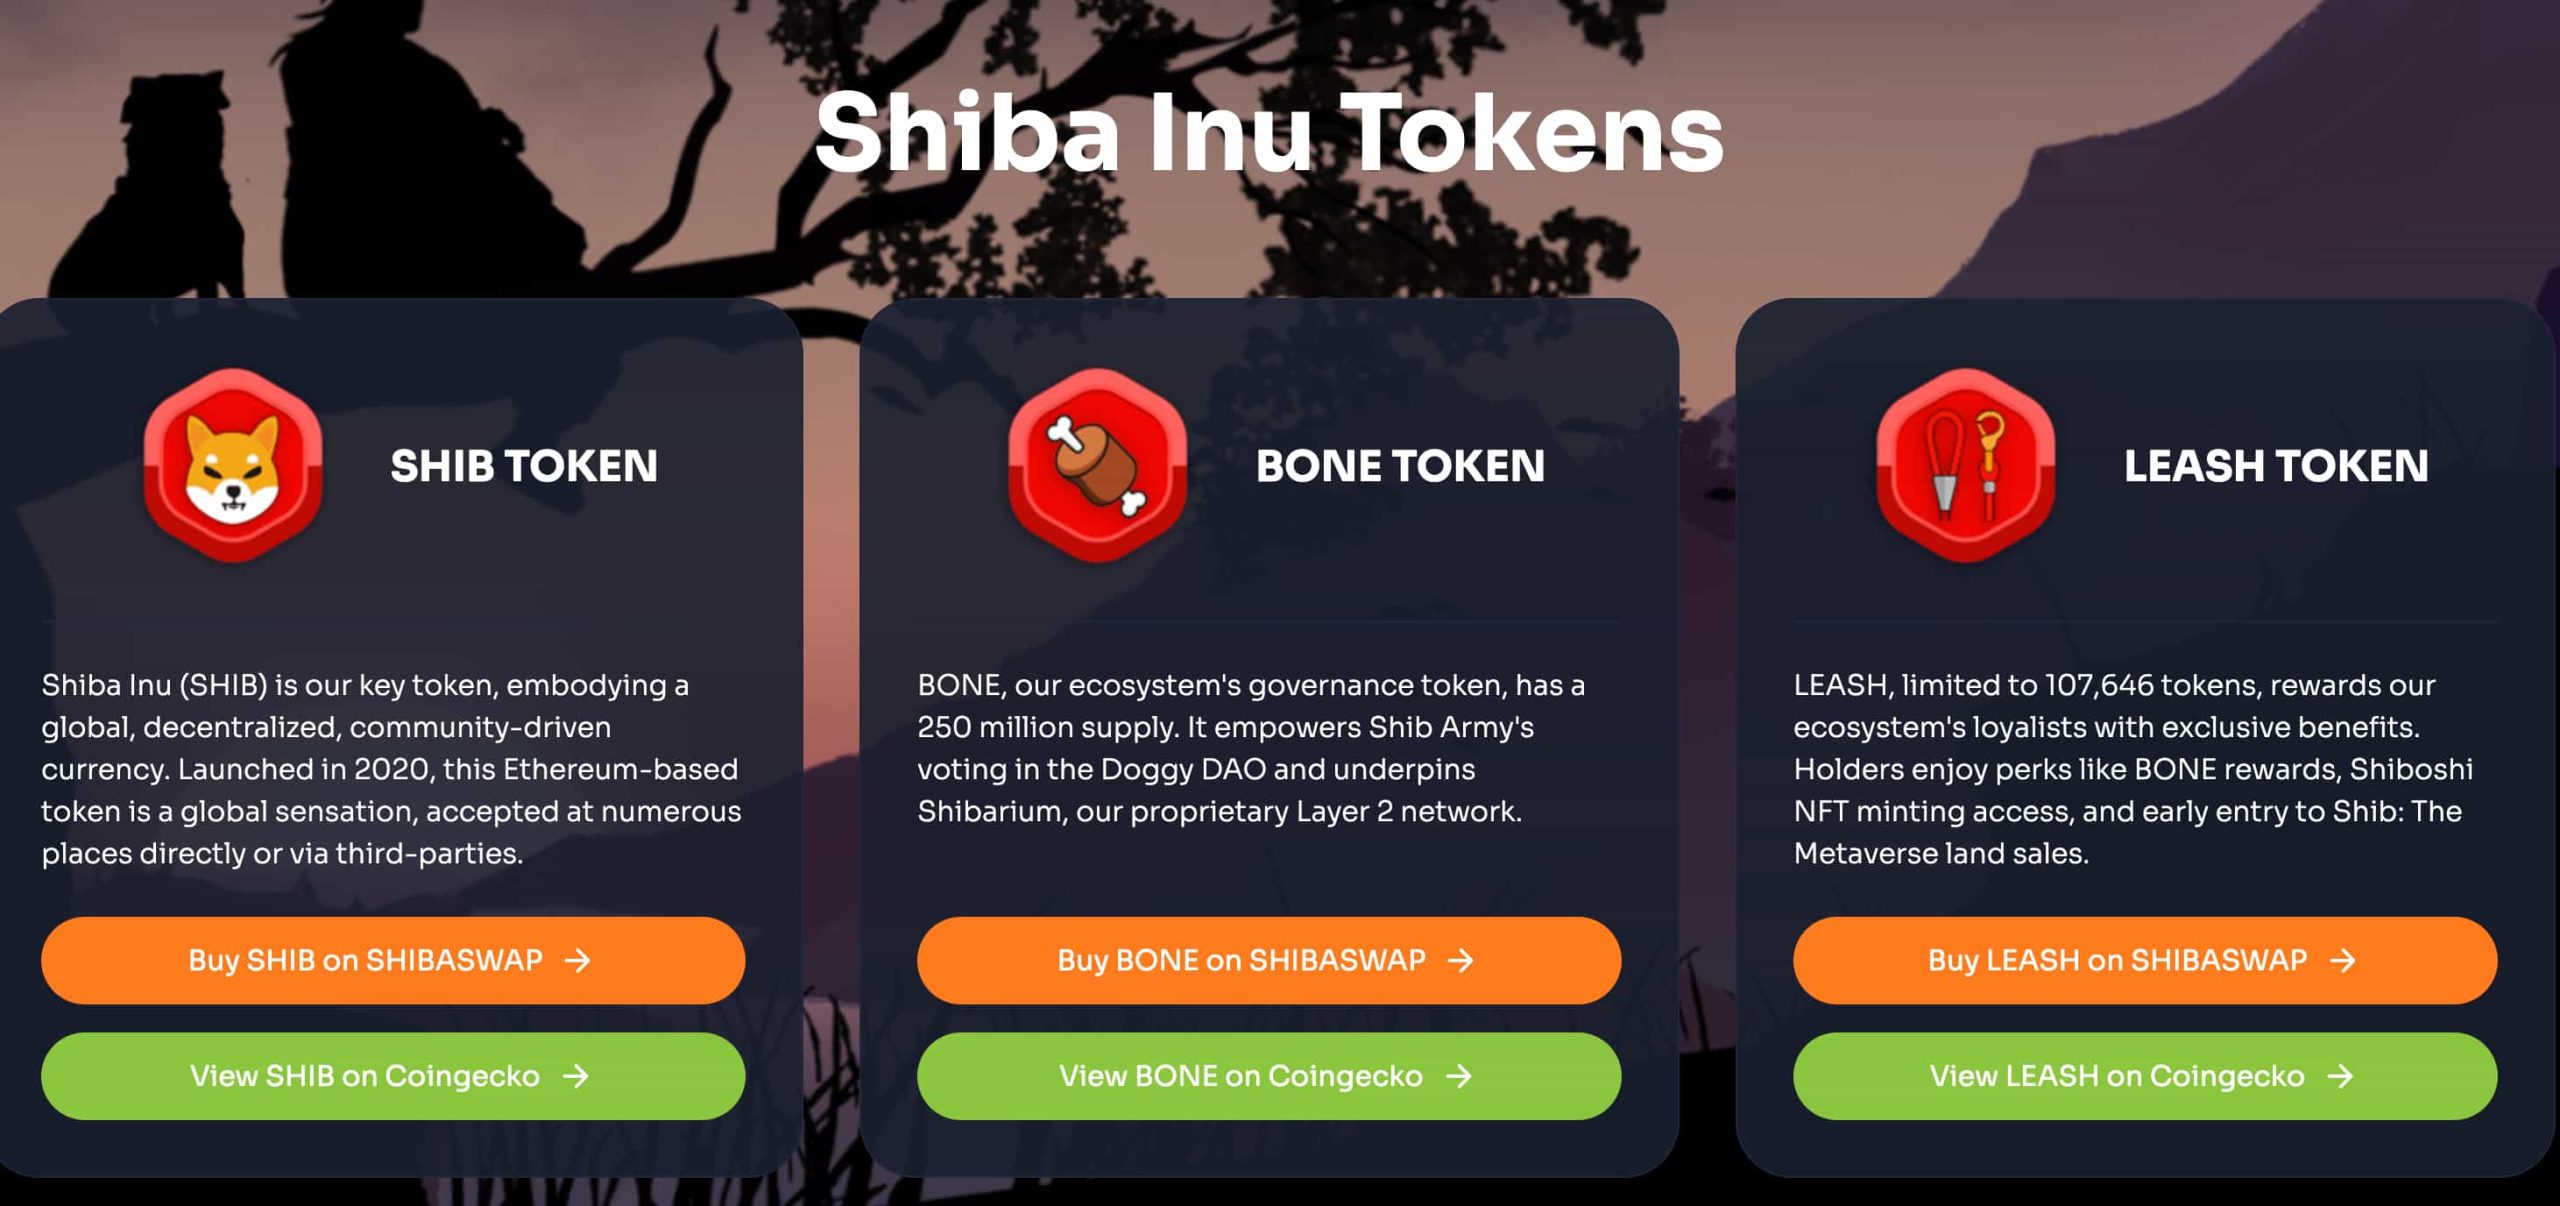 Shiba Inu tokens ecosystem with SHIB Token